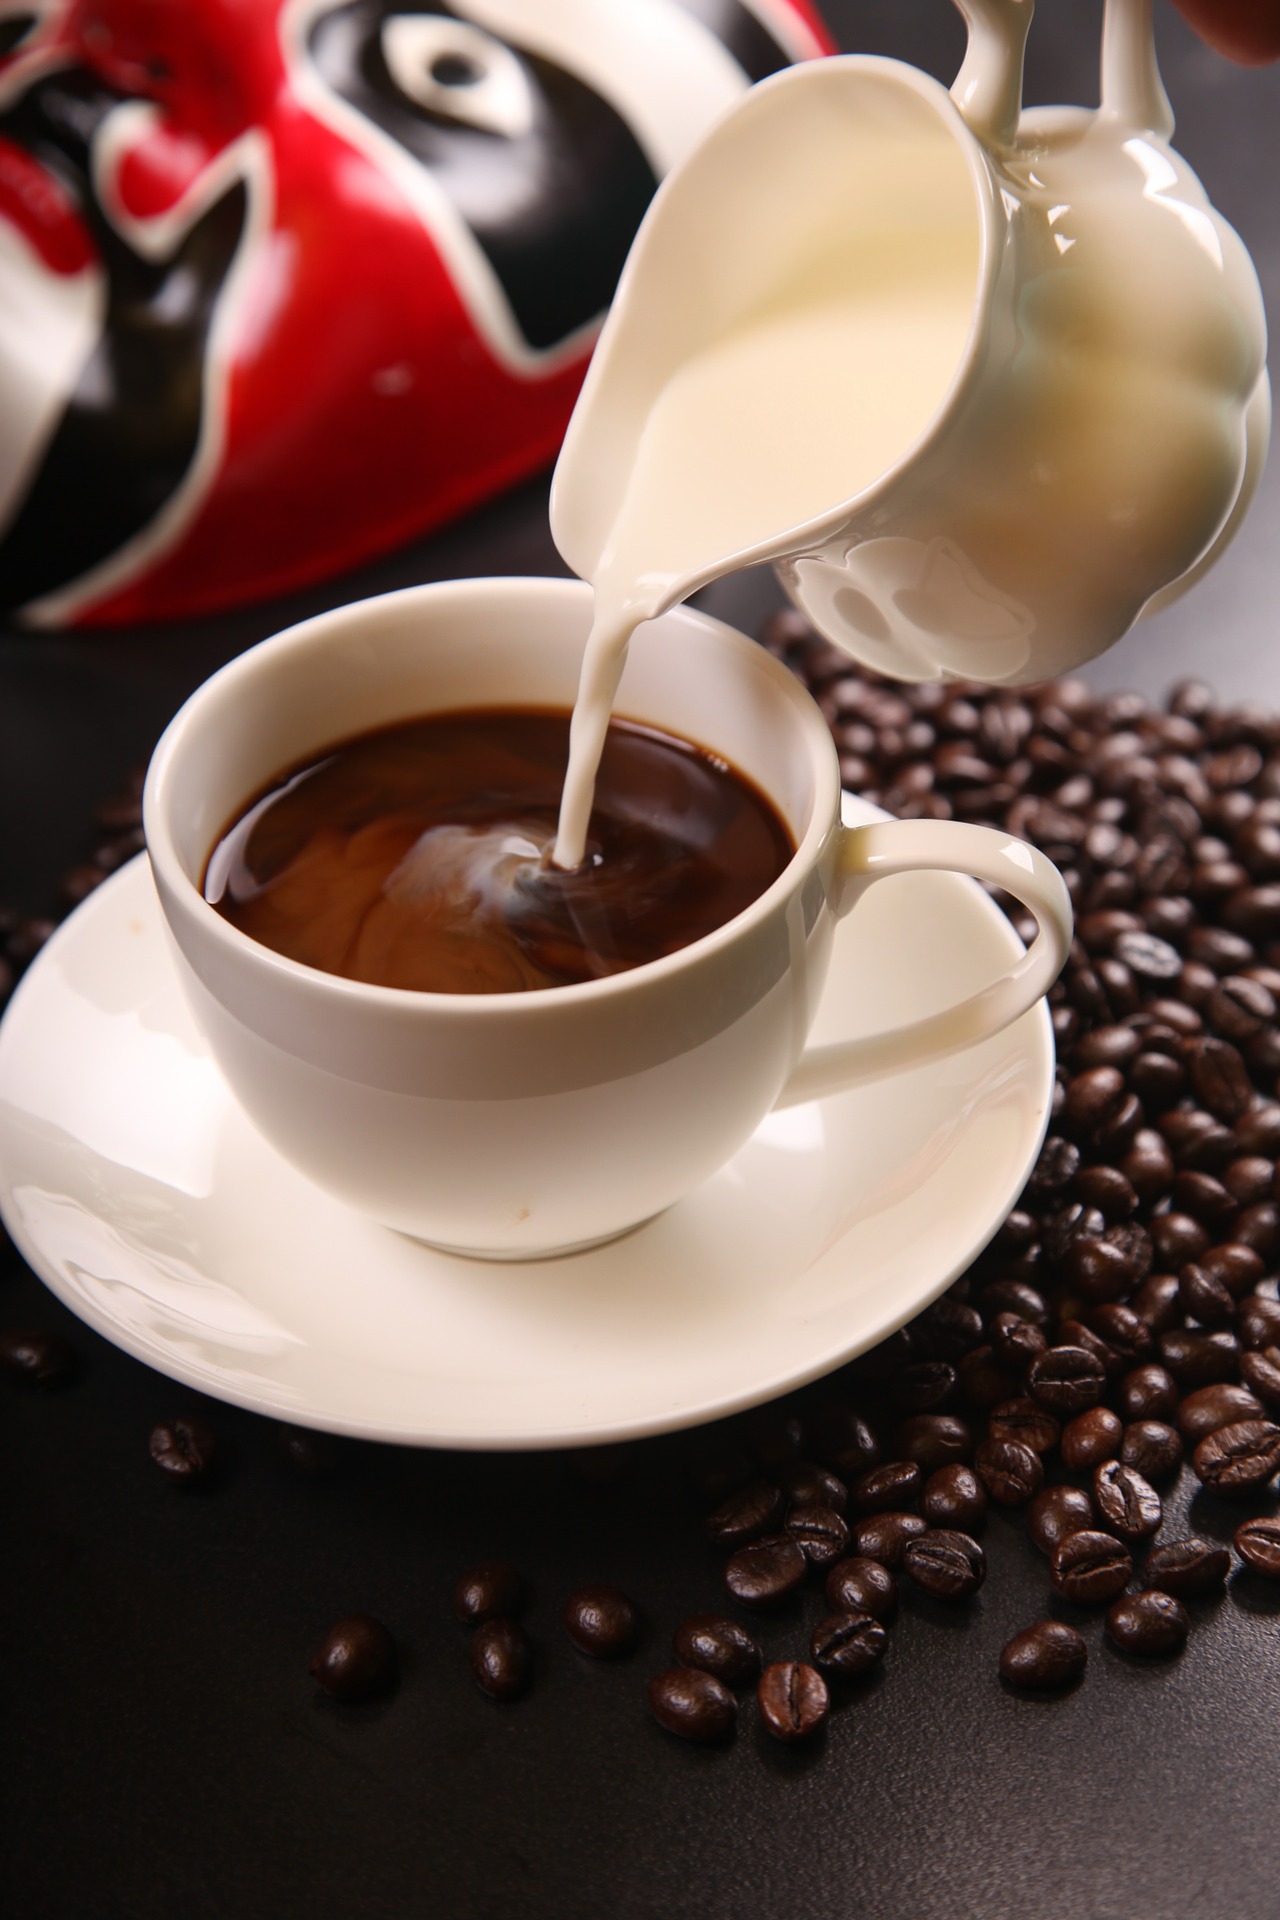 高咖啡摄入<font color="red">量</font>可能与低前列腺癌风险有关